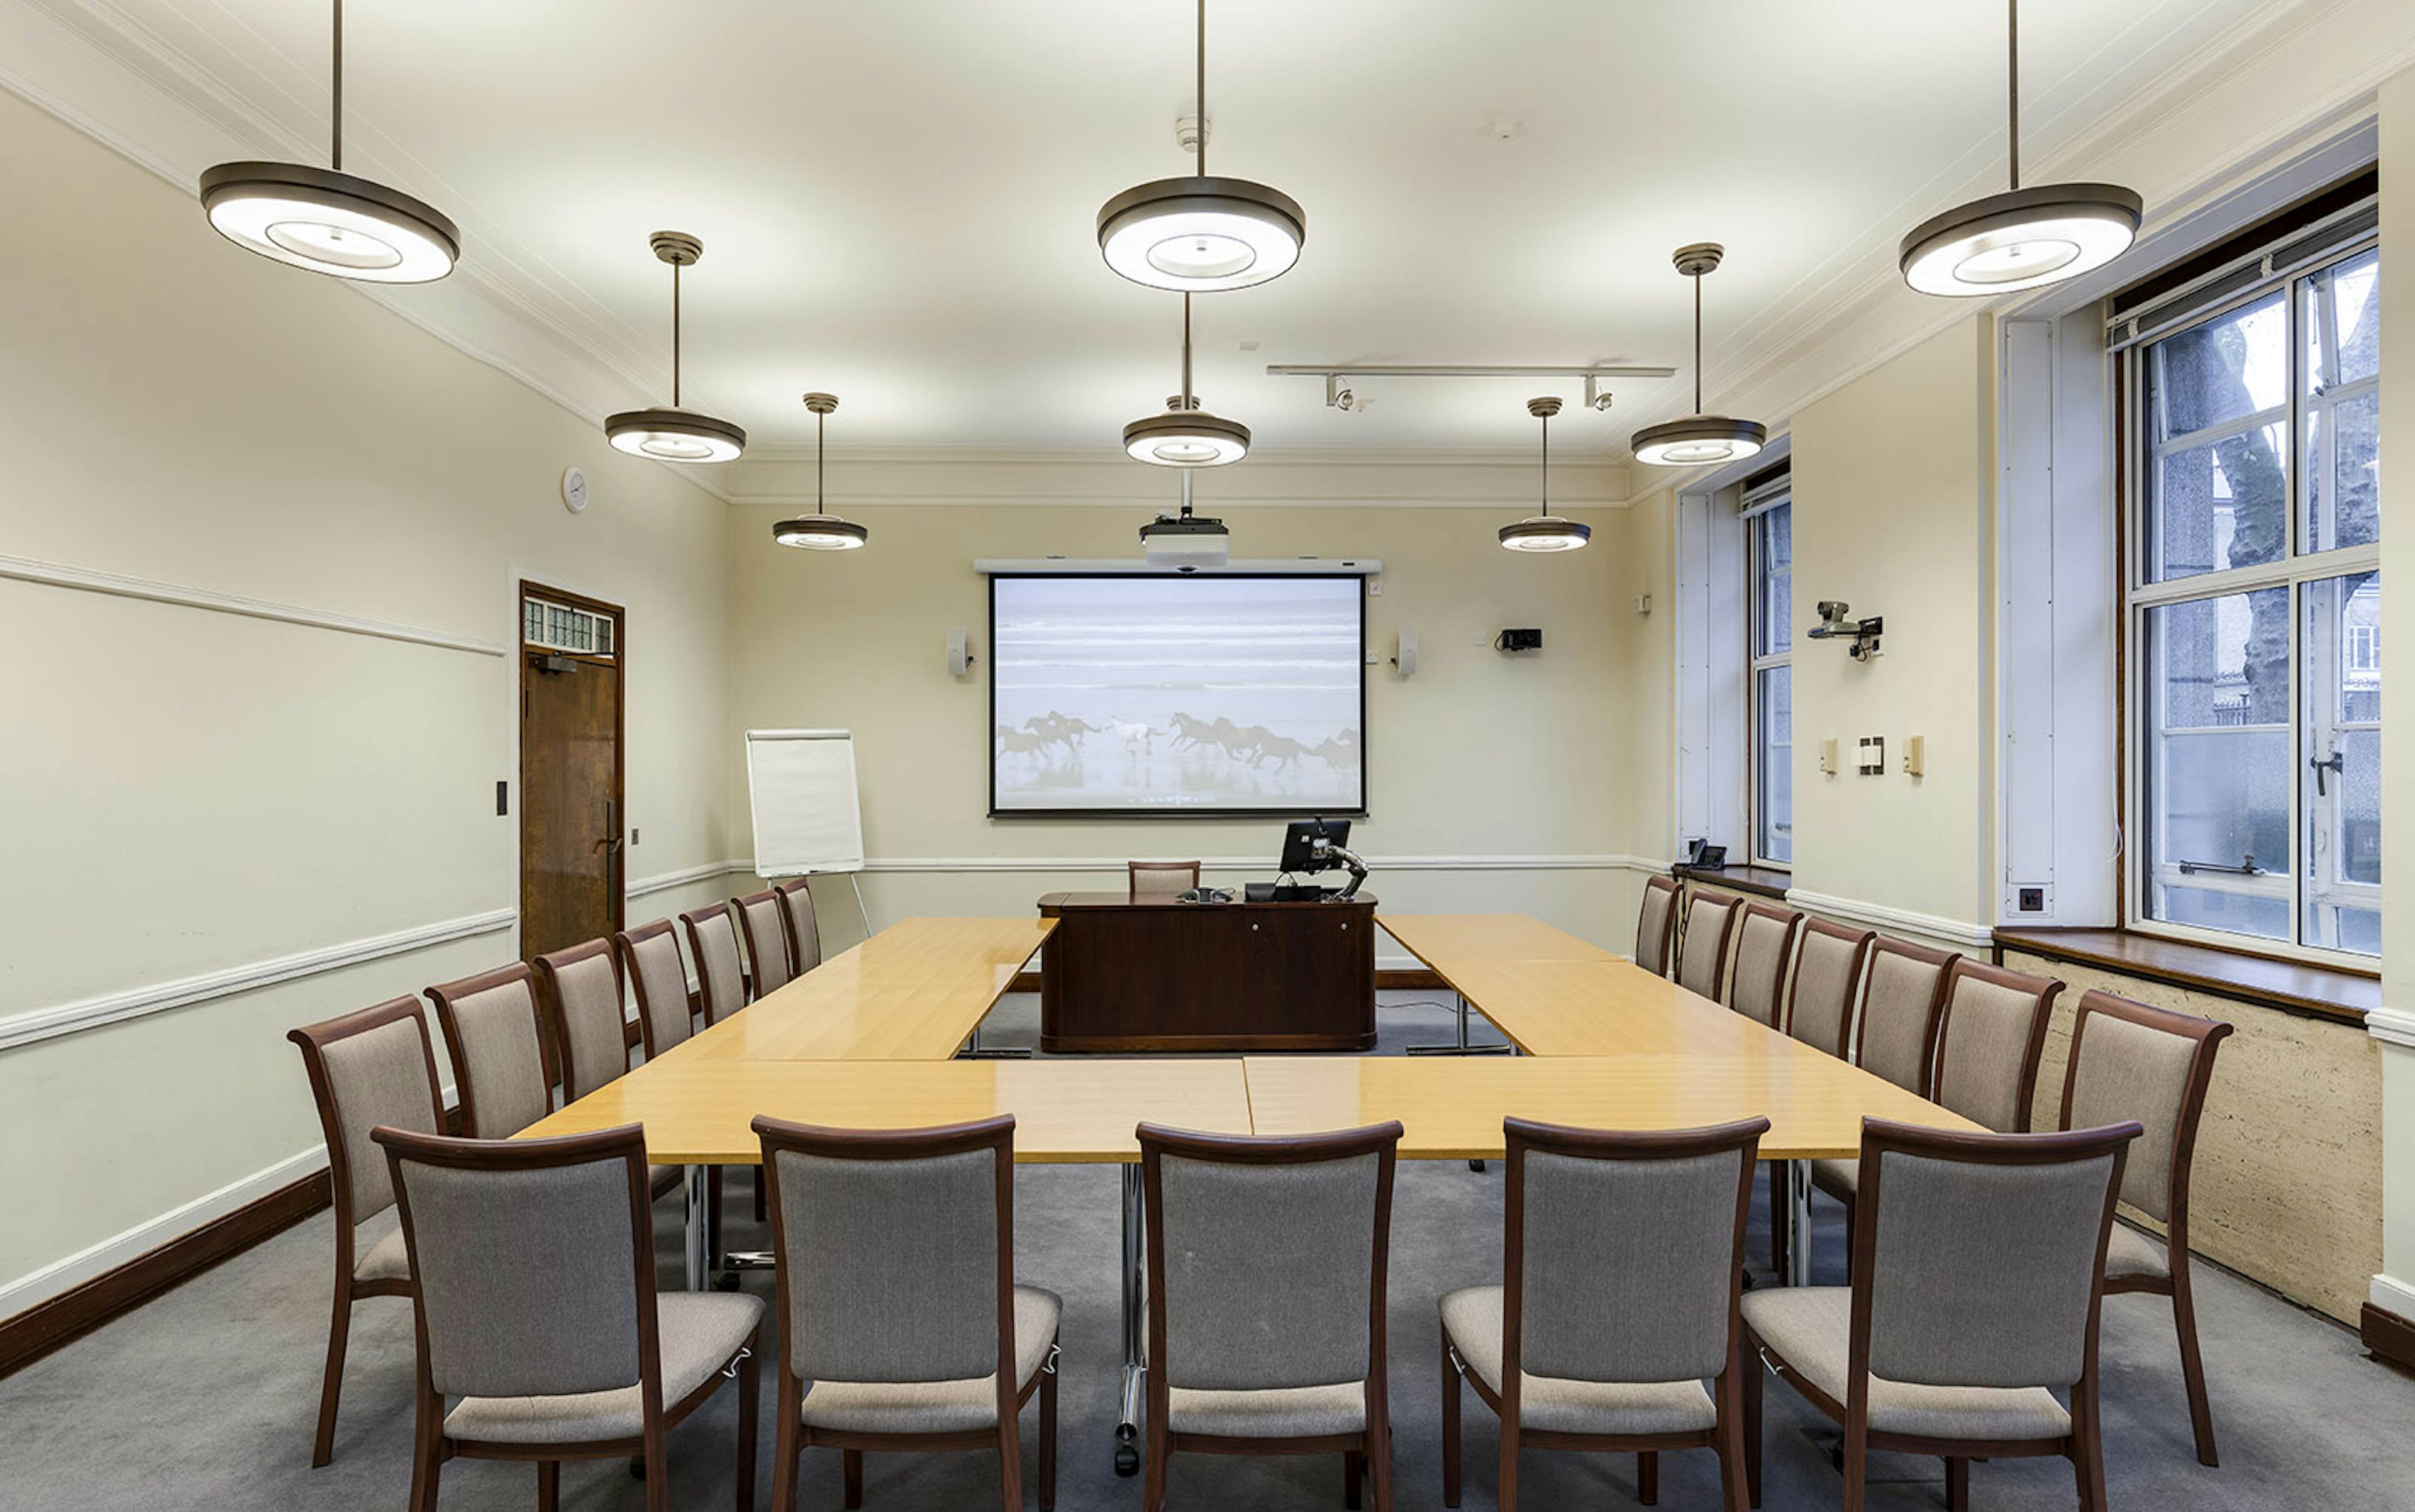 University of London Venues - Meeting Rooms - Senate House image 1